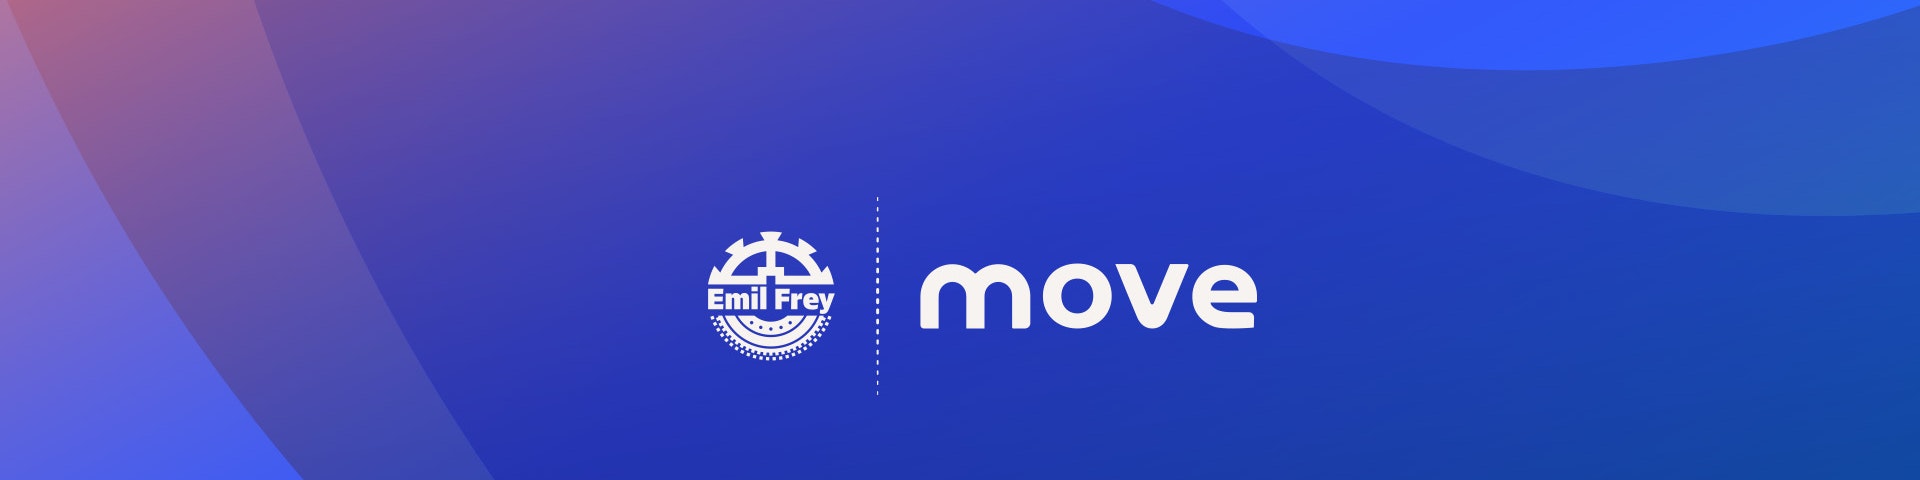 Emil Frey move